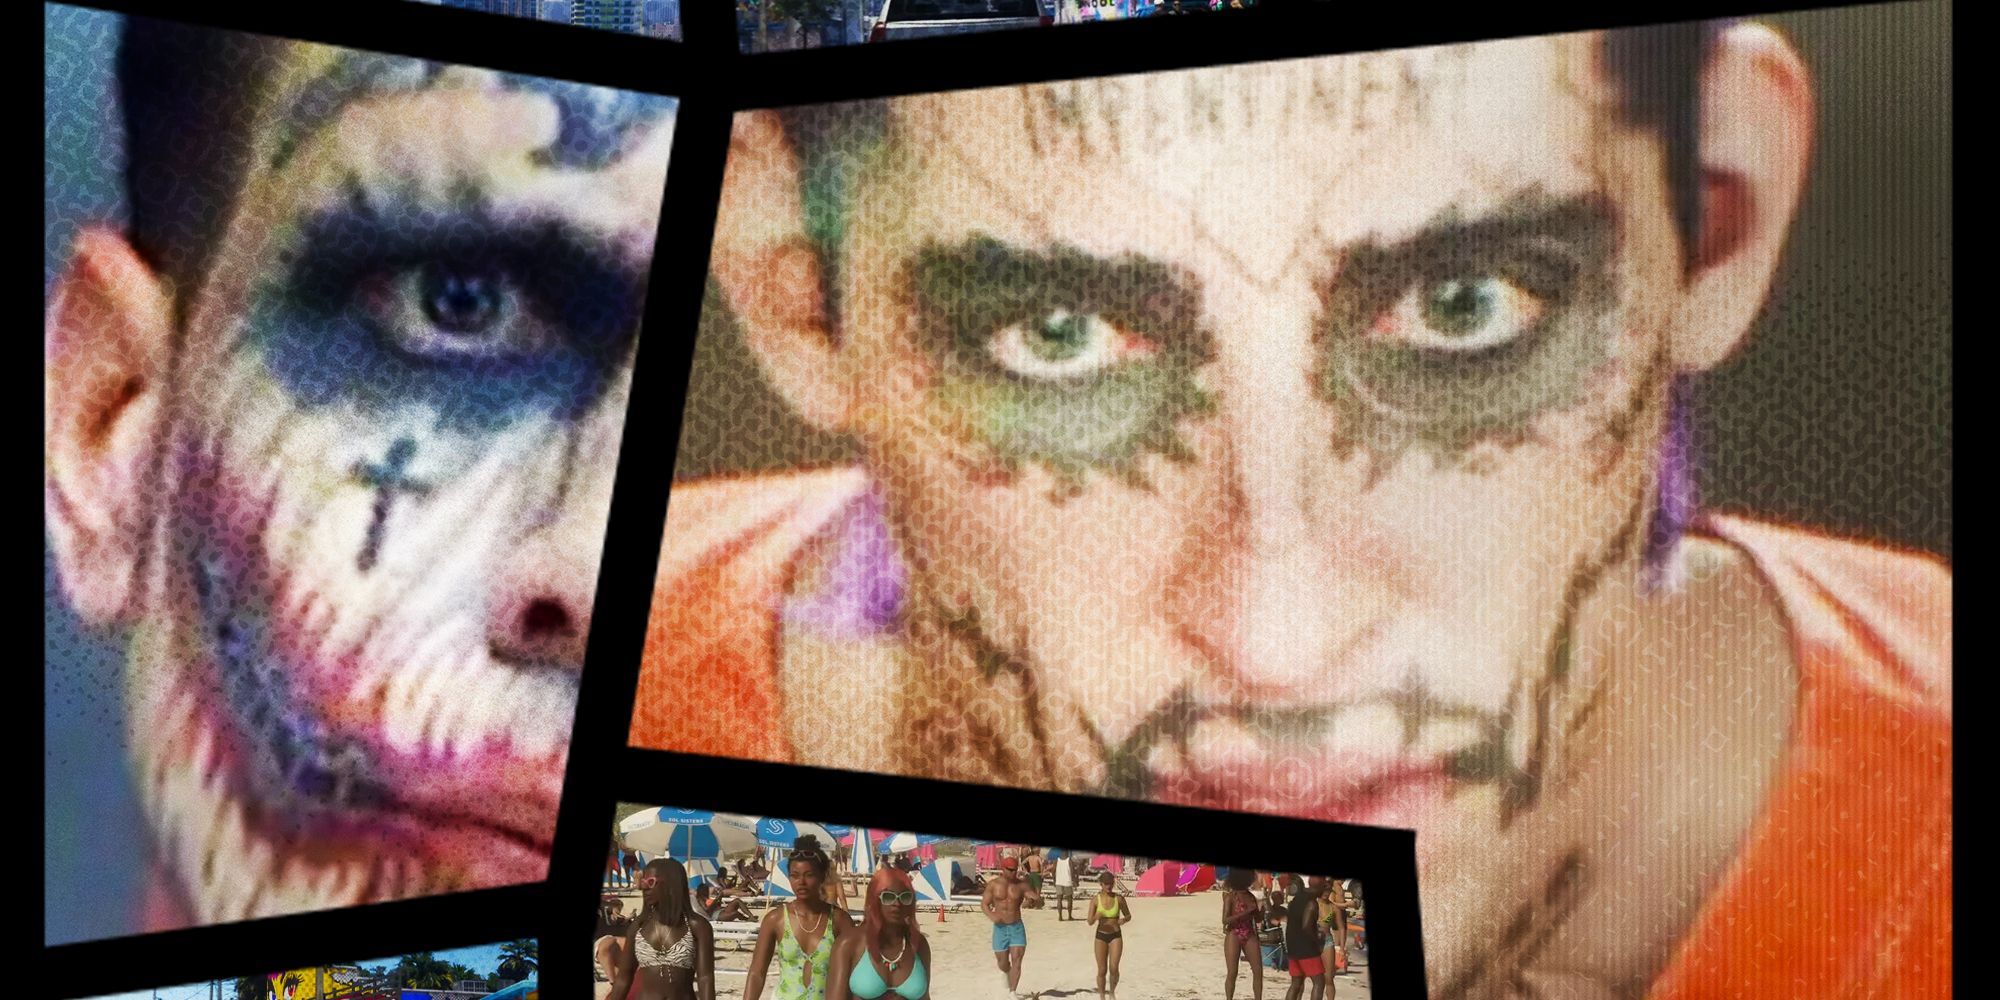 GTA6 Stole My Face: 'Florida Joker' Demands $2 Million From